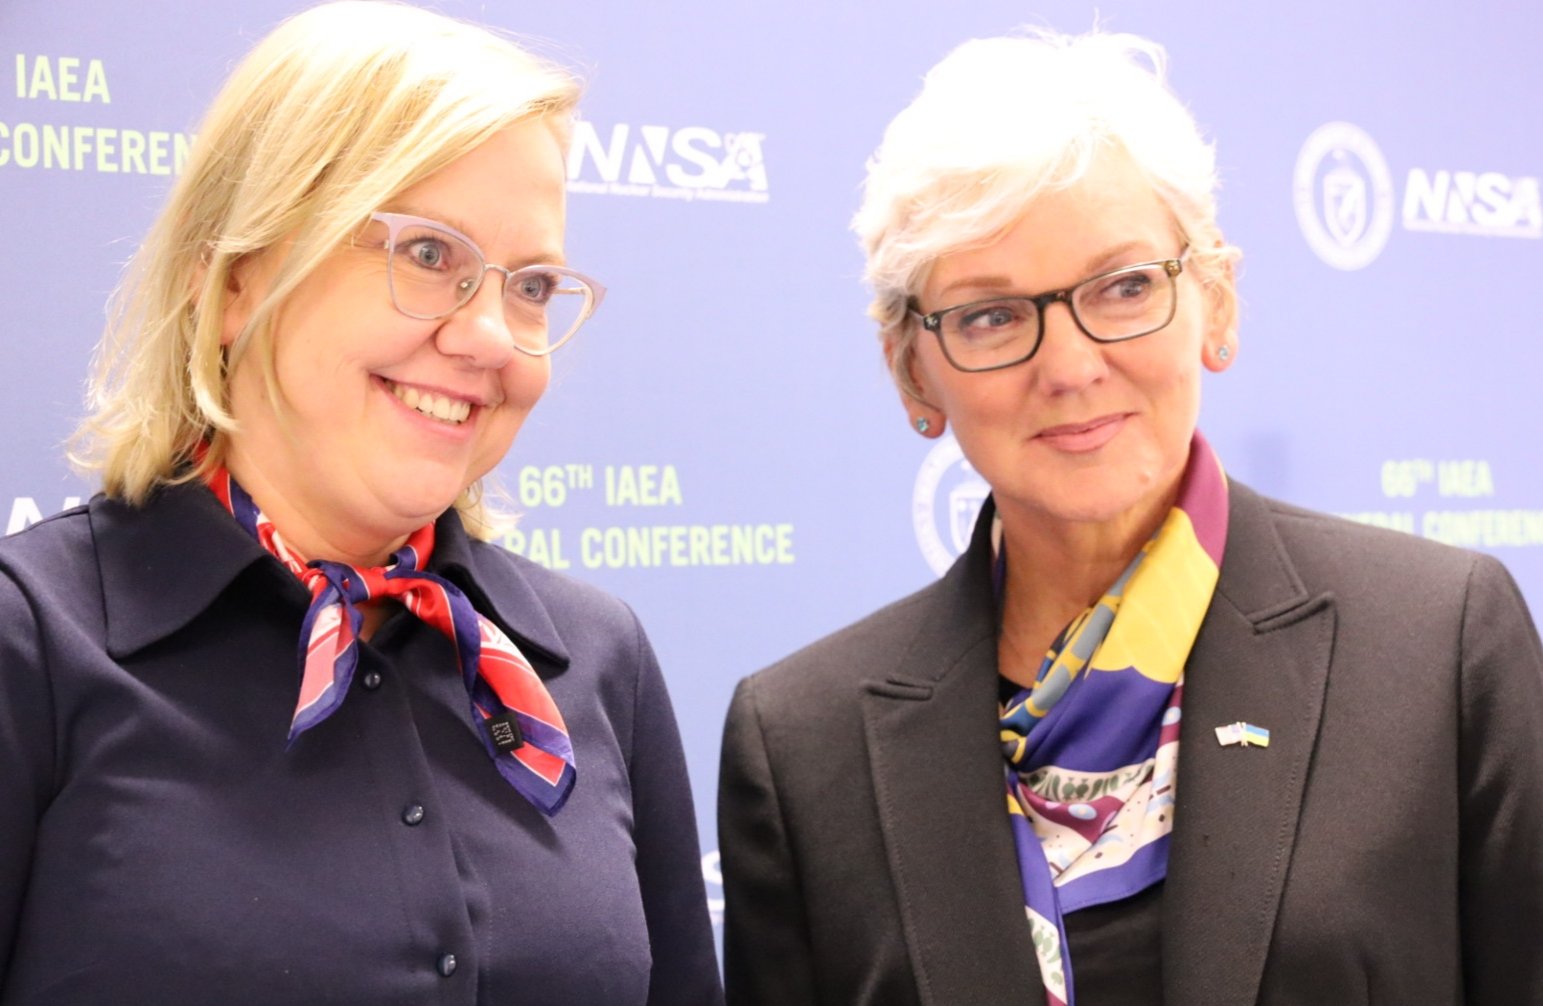 Minister klimatu i środowiska Anna Moskwa oraz Jennifer Granholm, sekretarz energii USA. Fot. Ministerstwo klimatu i środowiska.